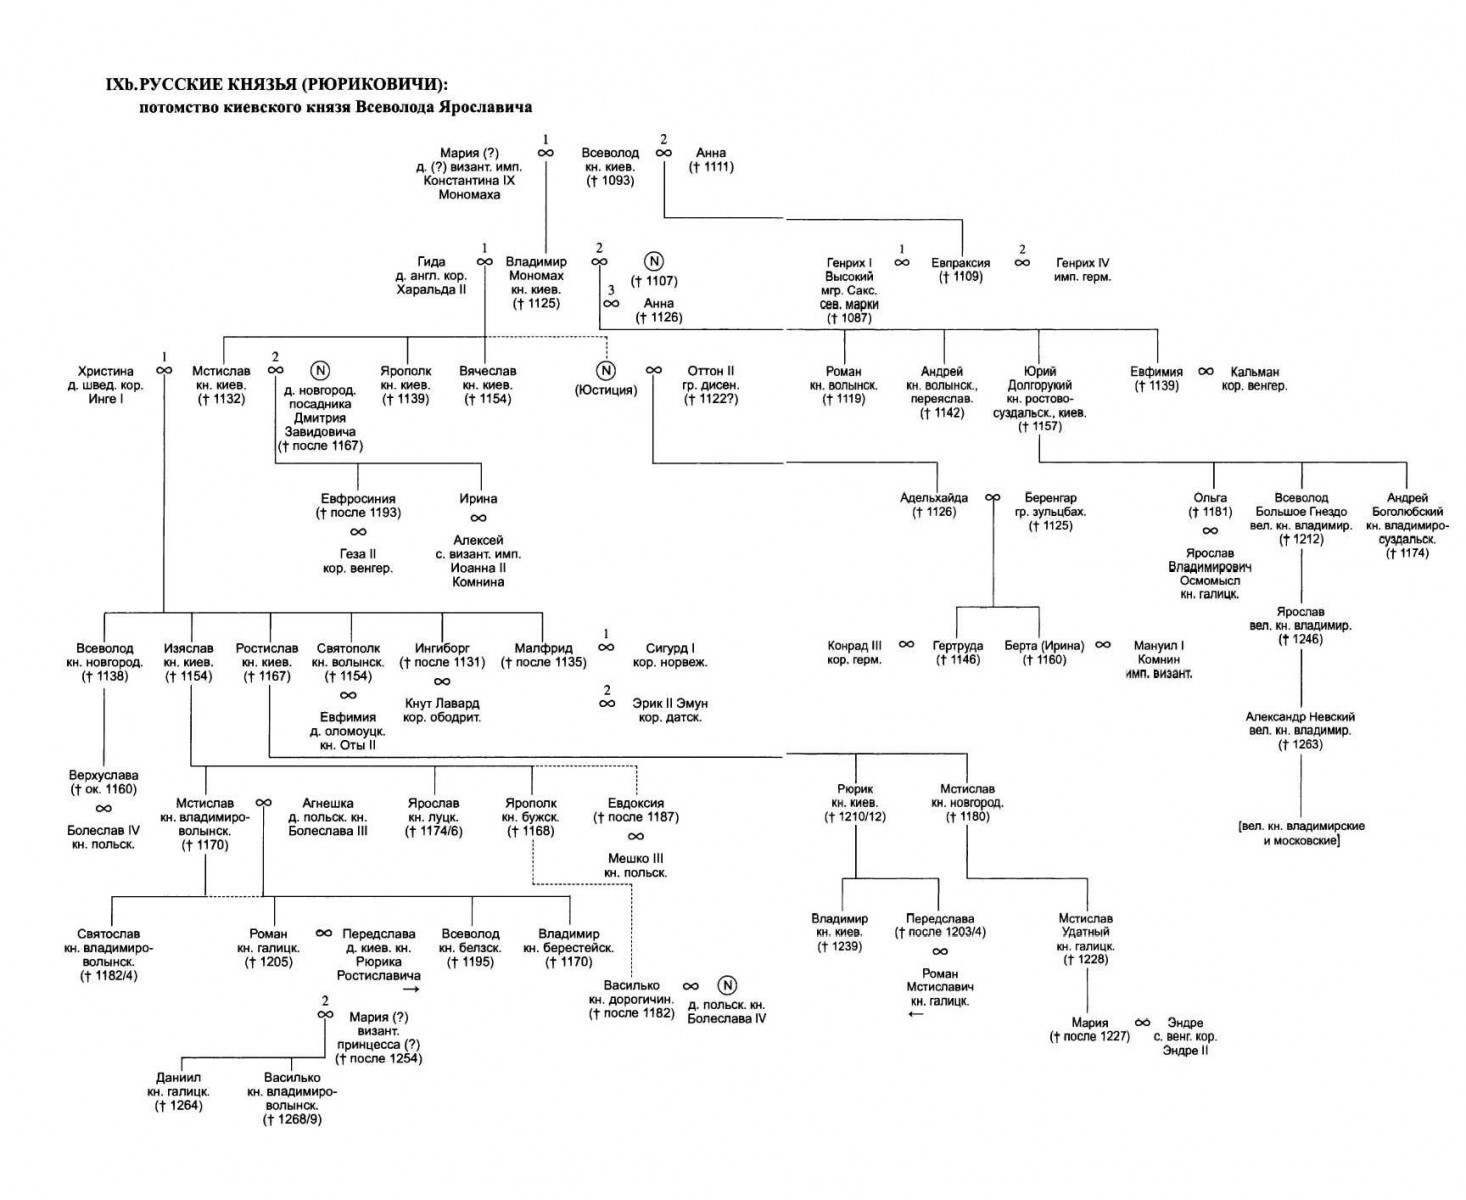 Рюриковичи история первой династии